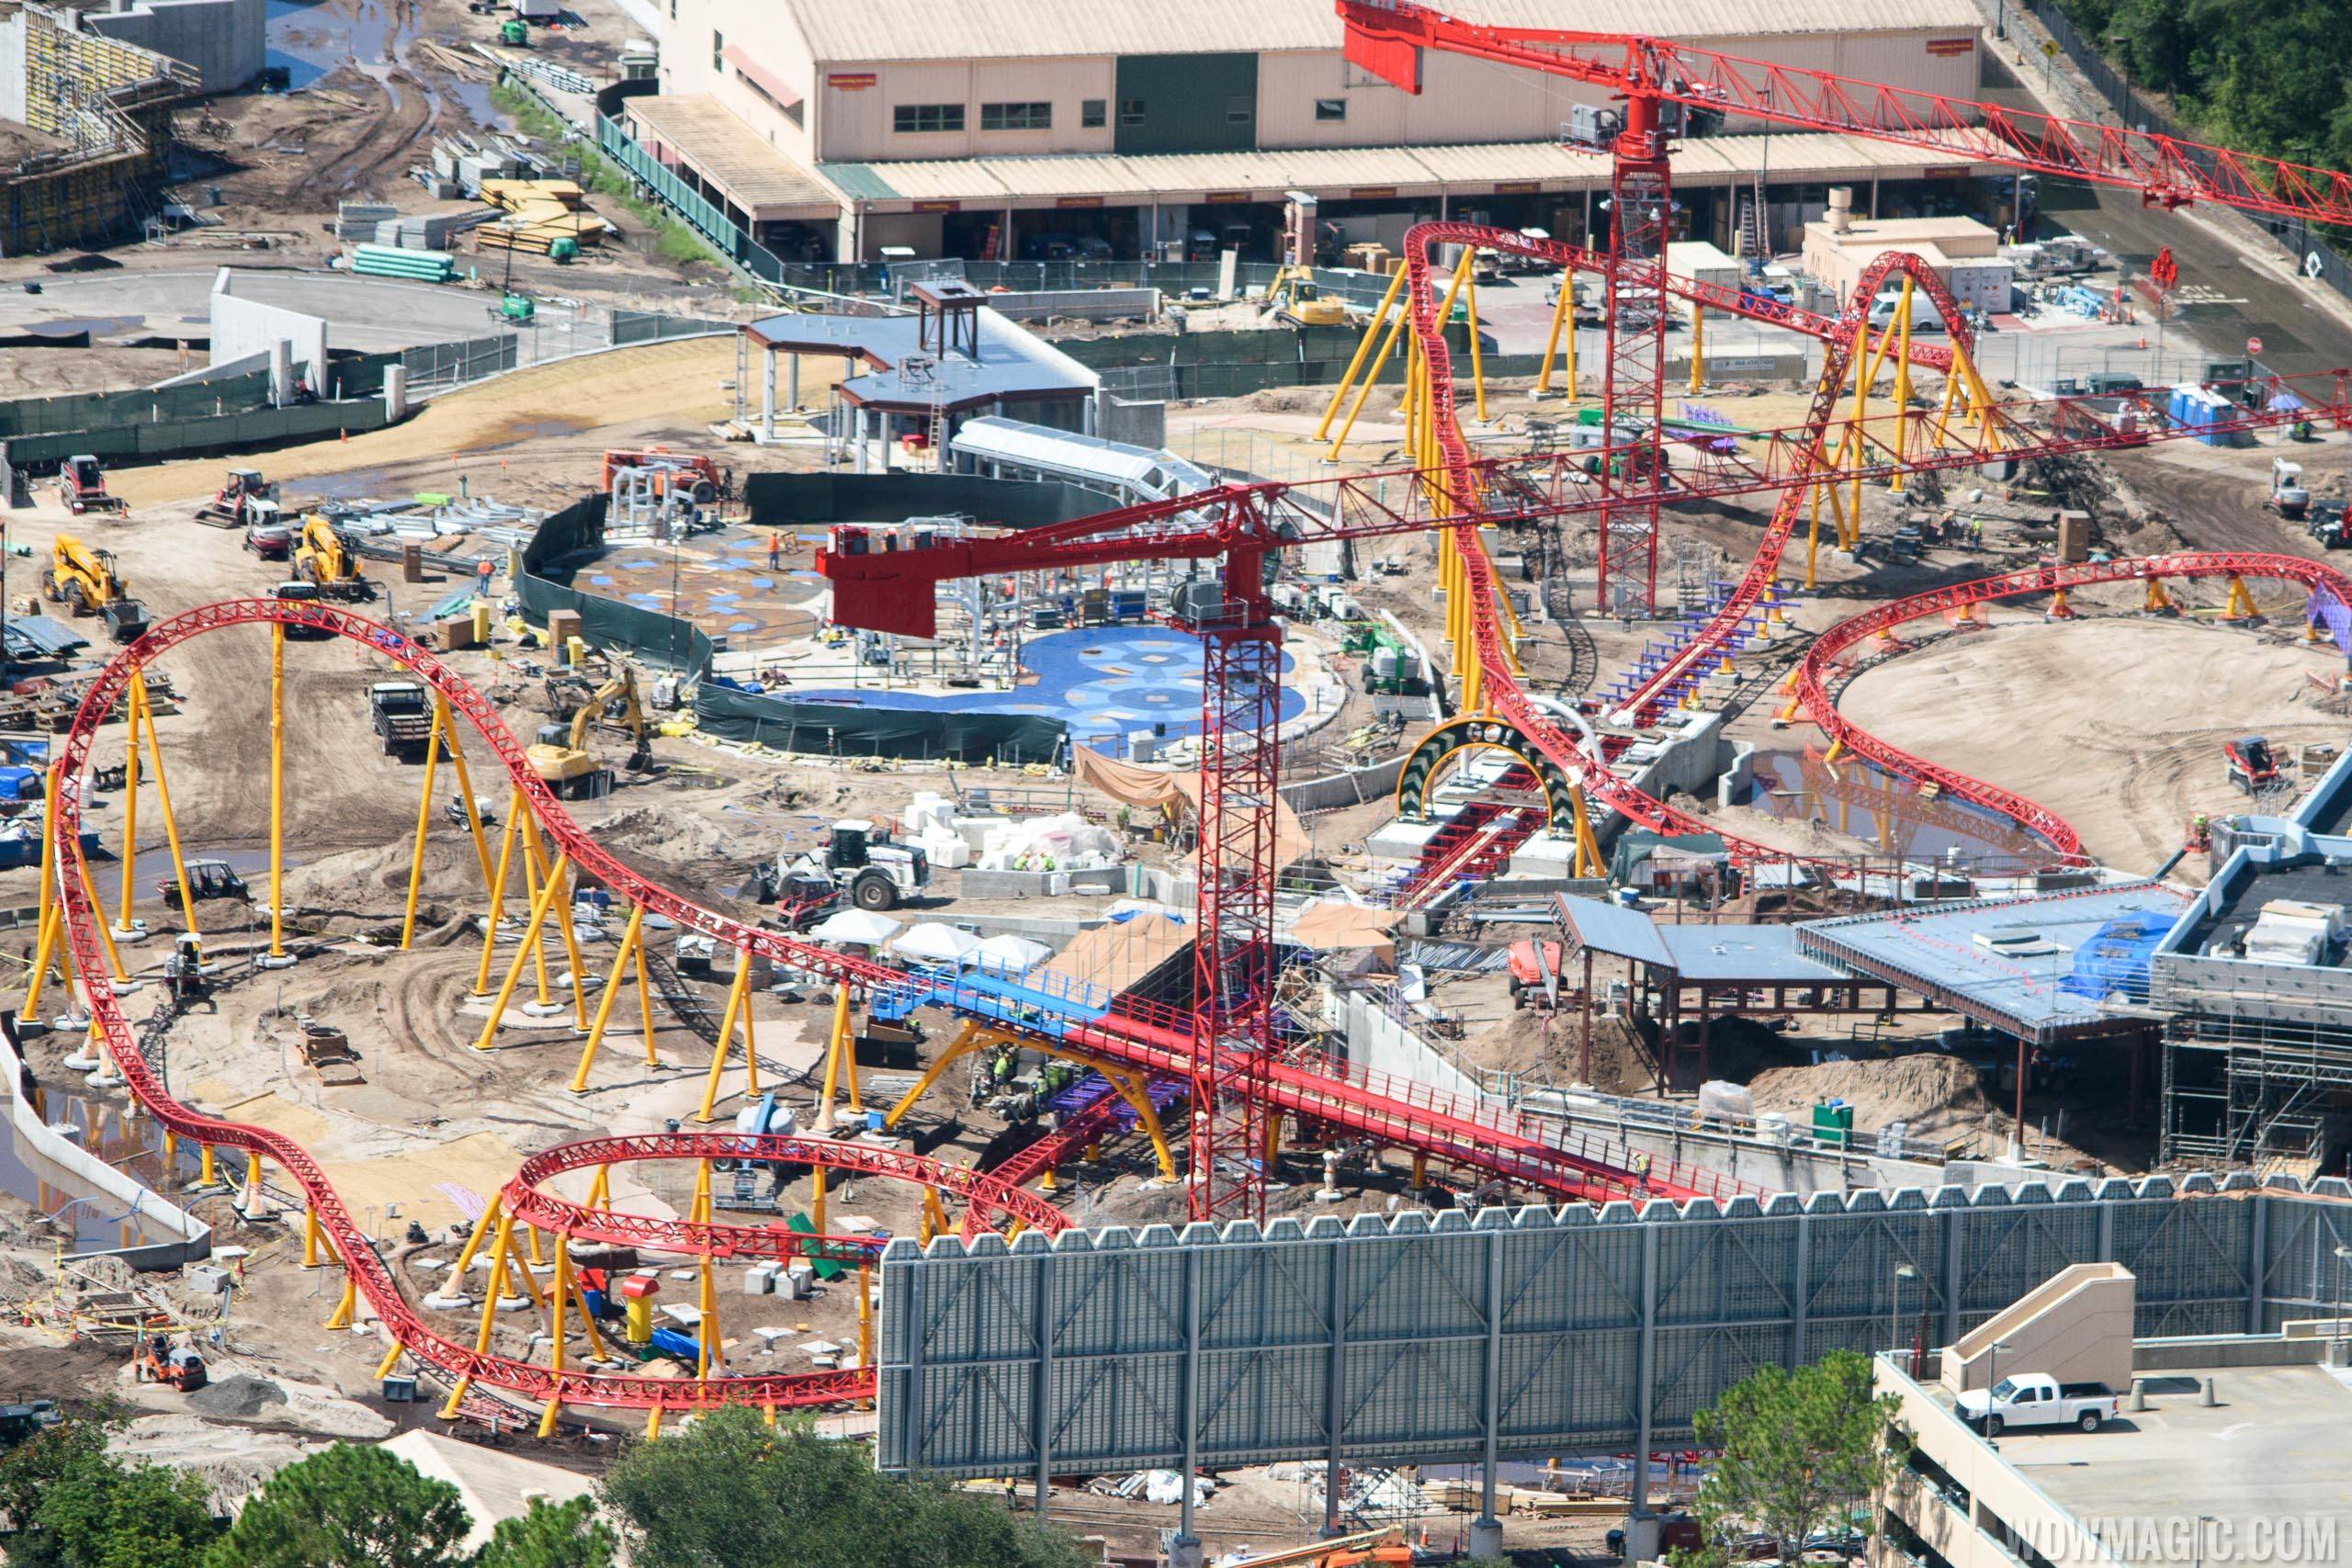 Slinky Dog Coaster construction at Toy Story Land